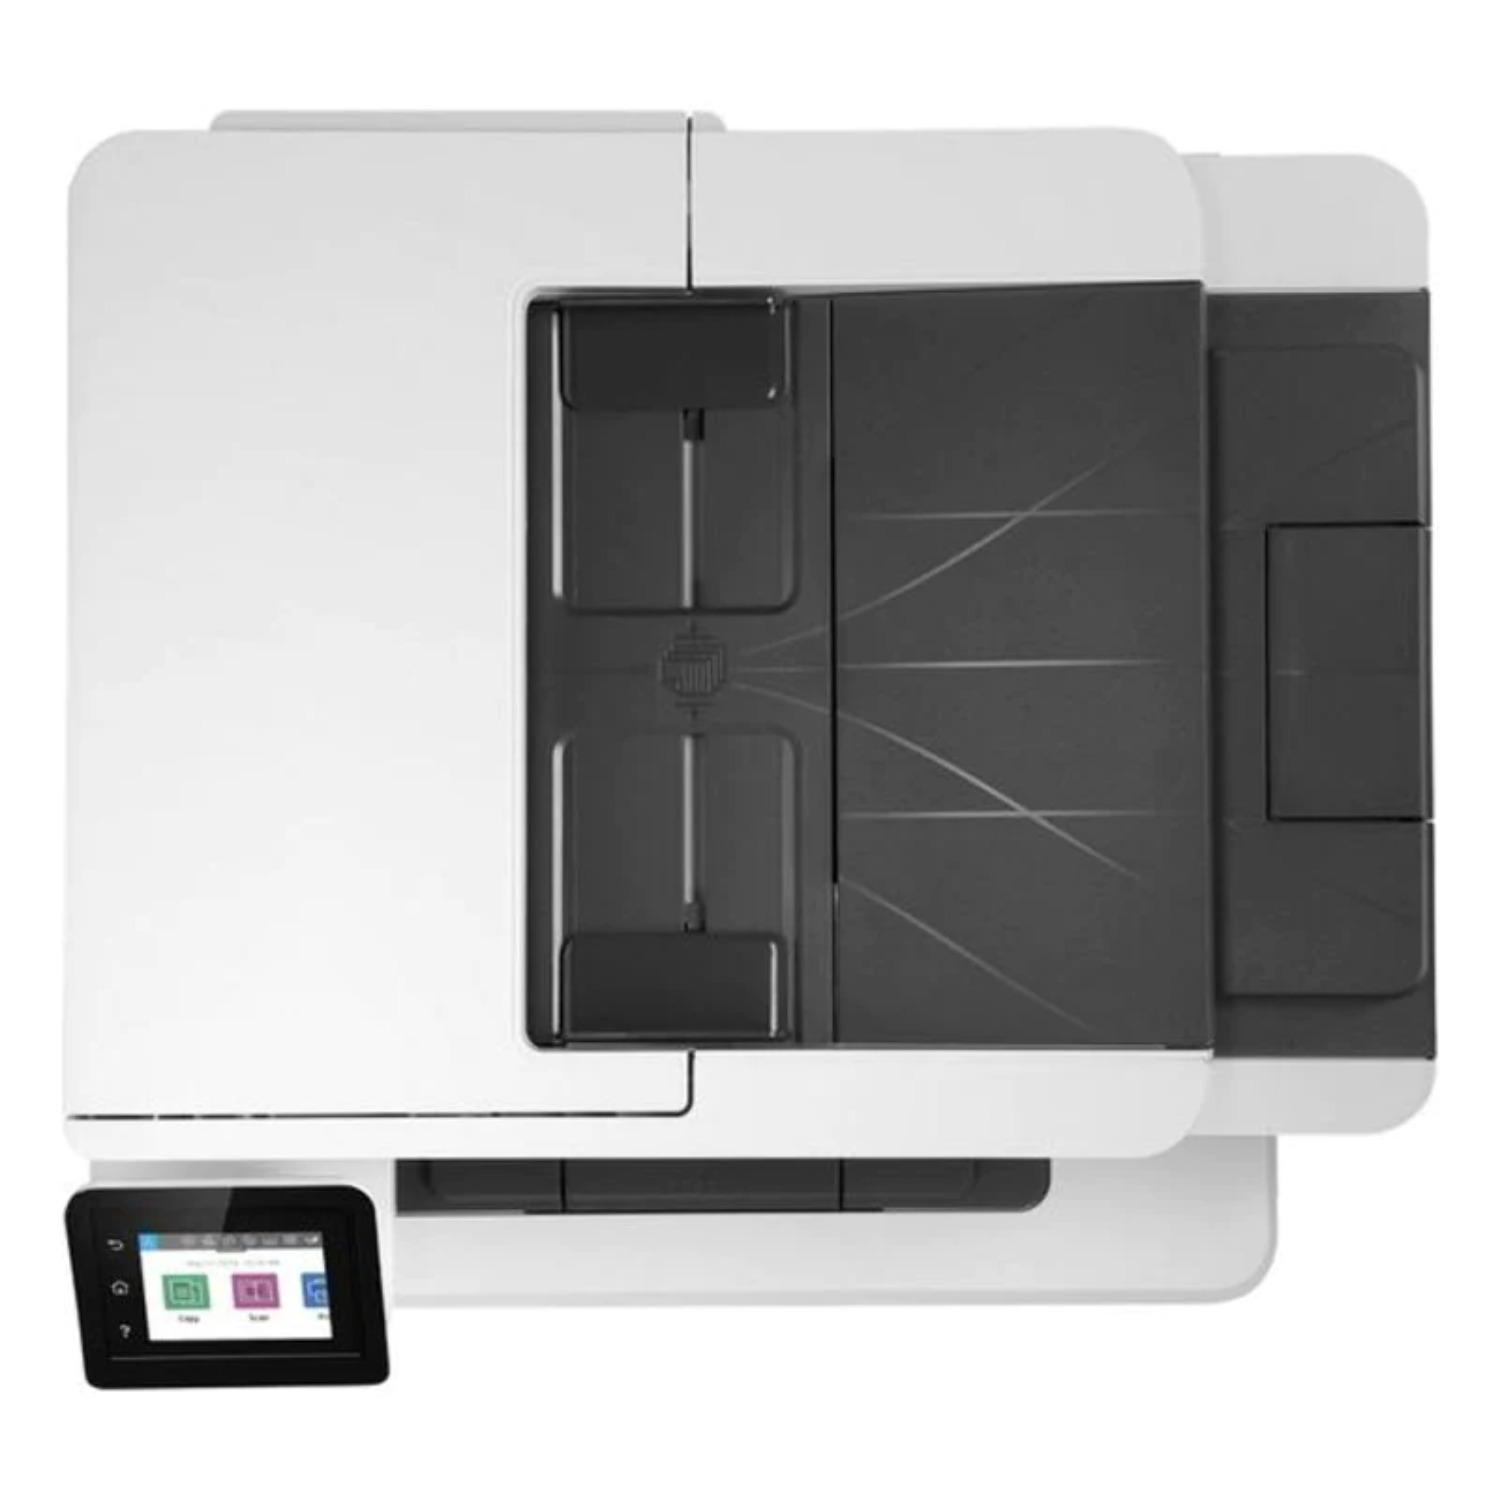 Laser Printer HP W1A28A#B19 38 ppm WiFi - image 2 of 4